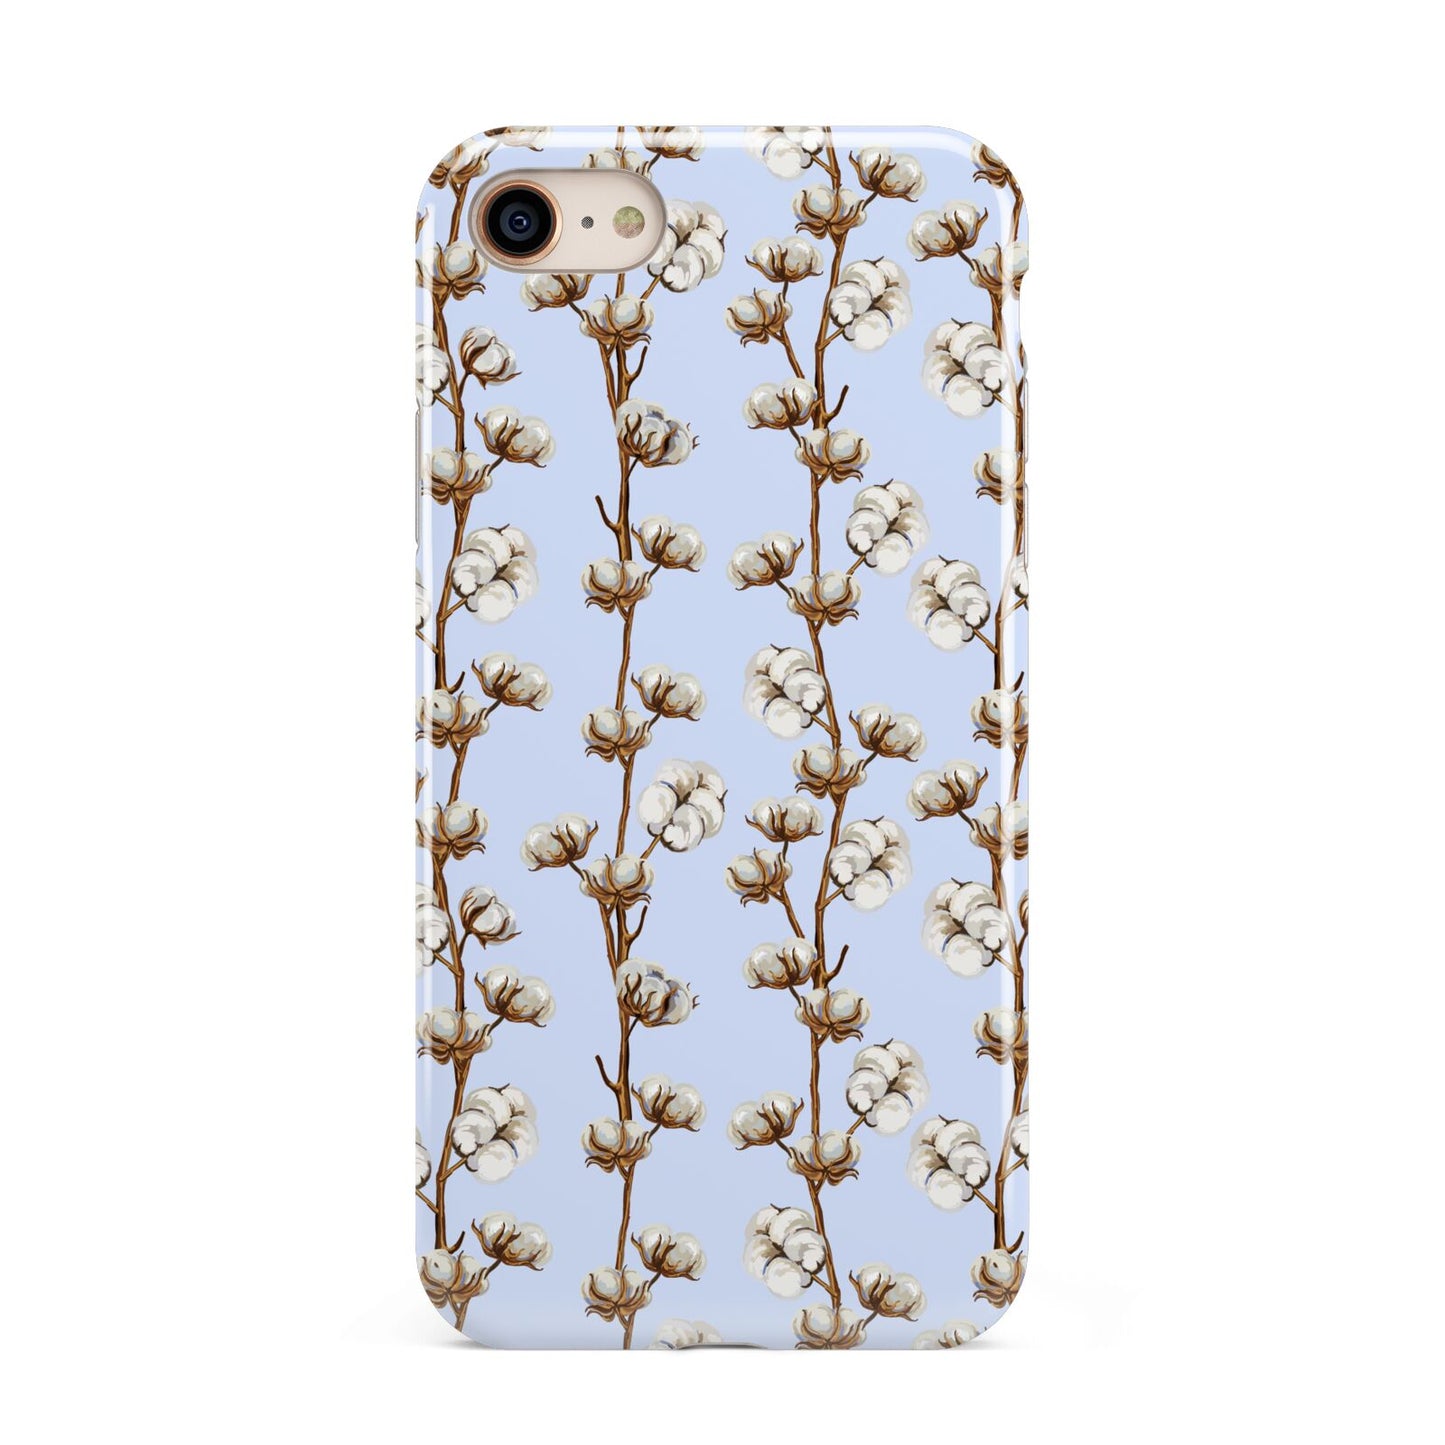 Cotton Branch iPhone 8 3D Tough Case on Gold Phone